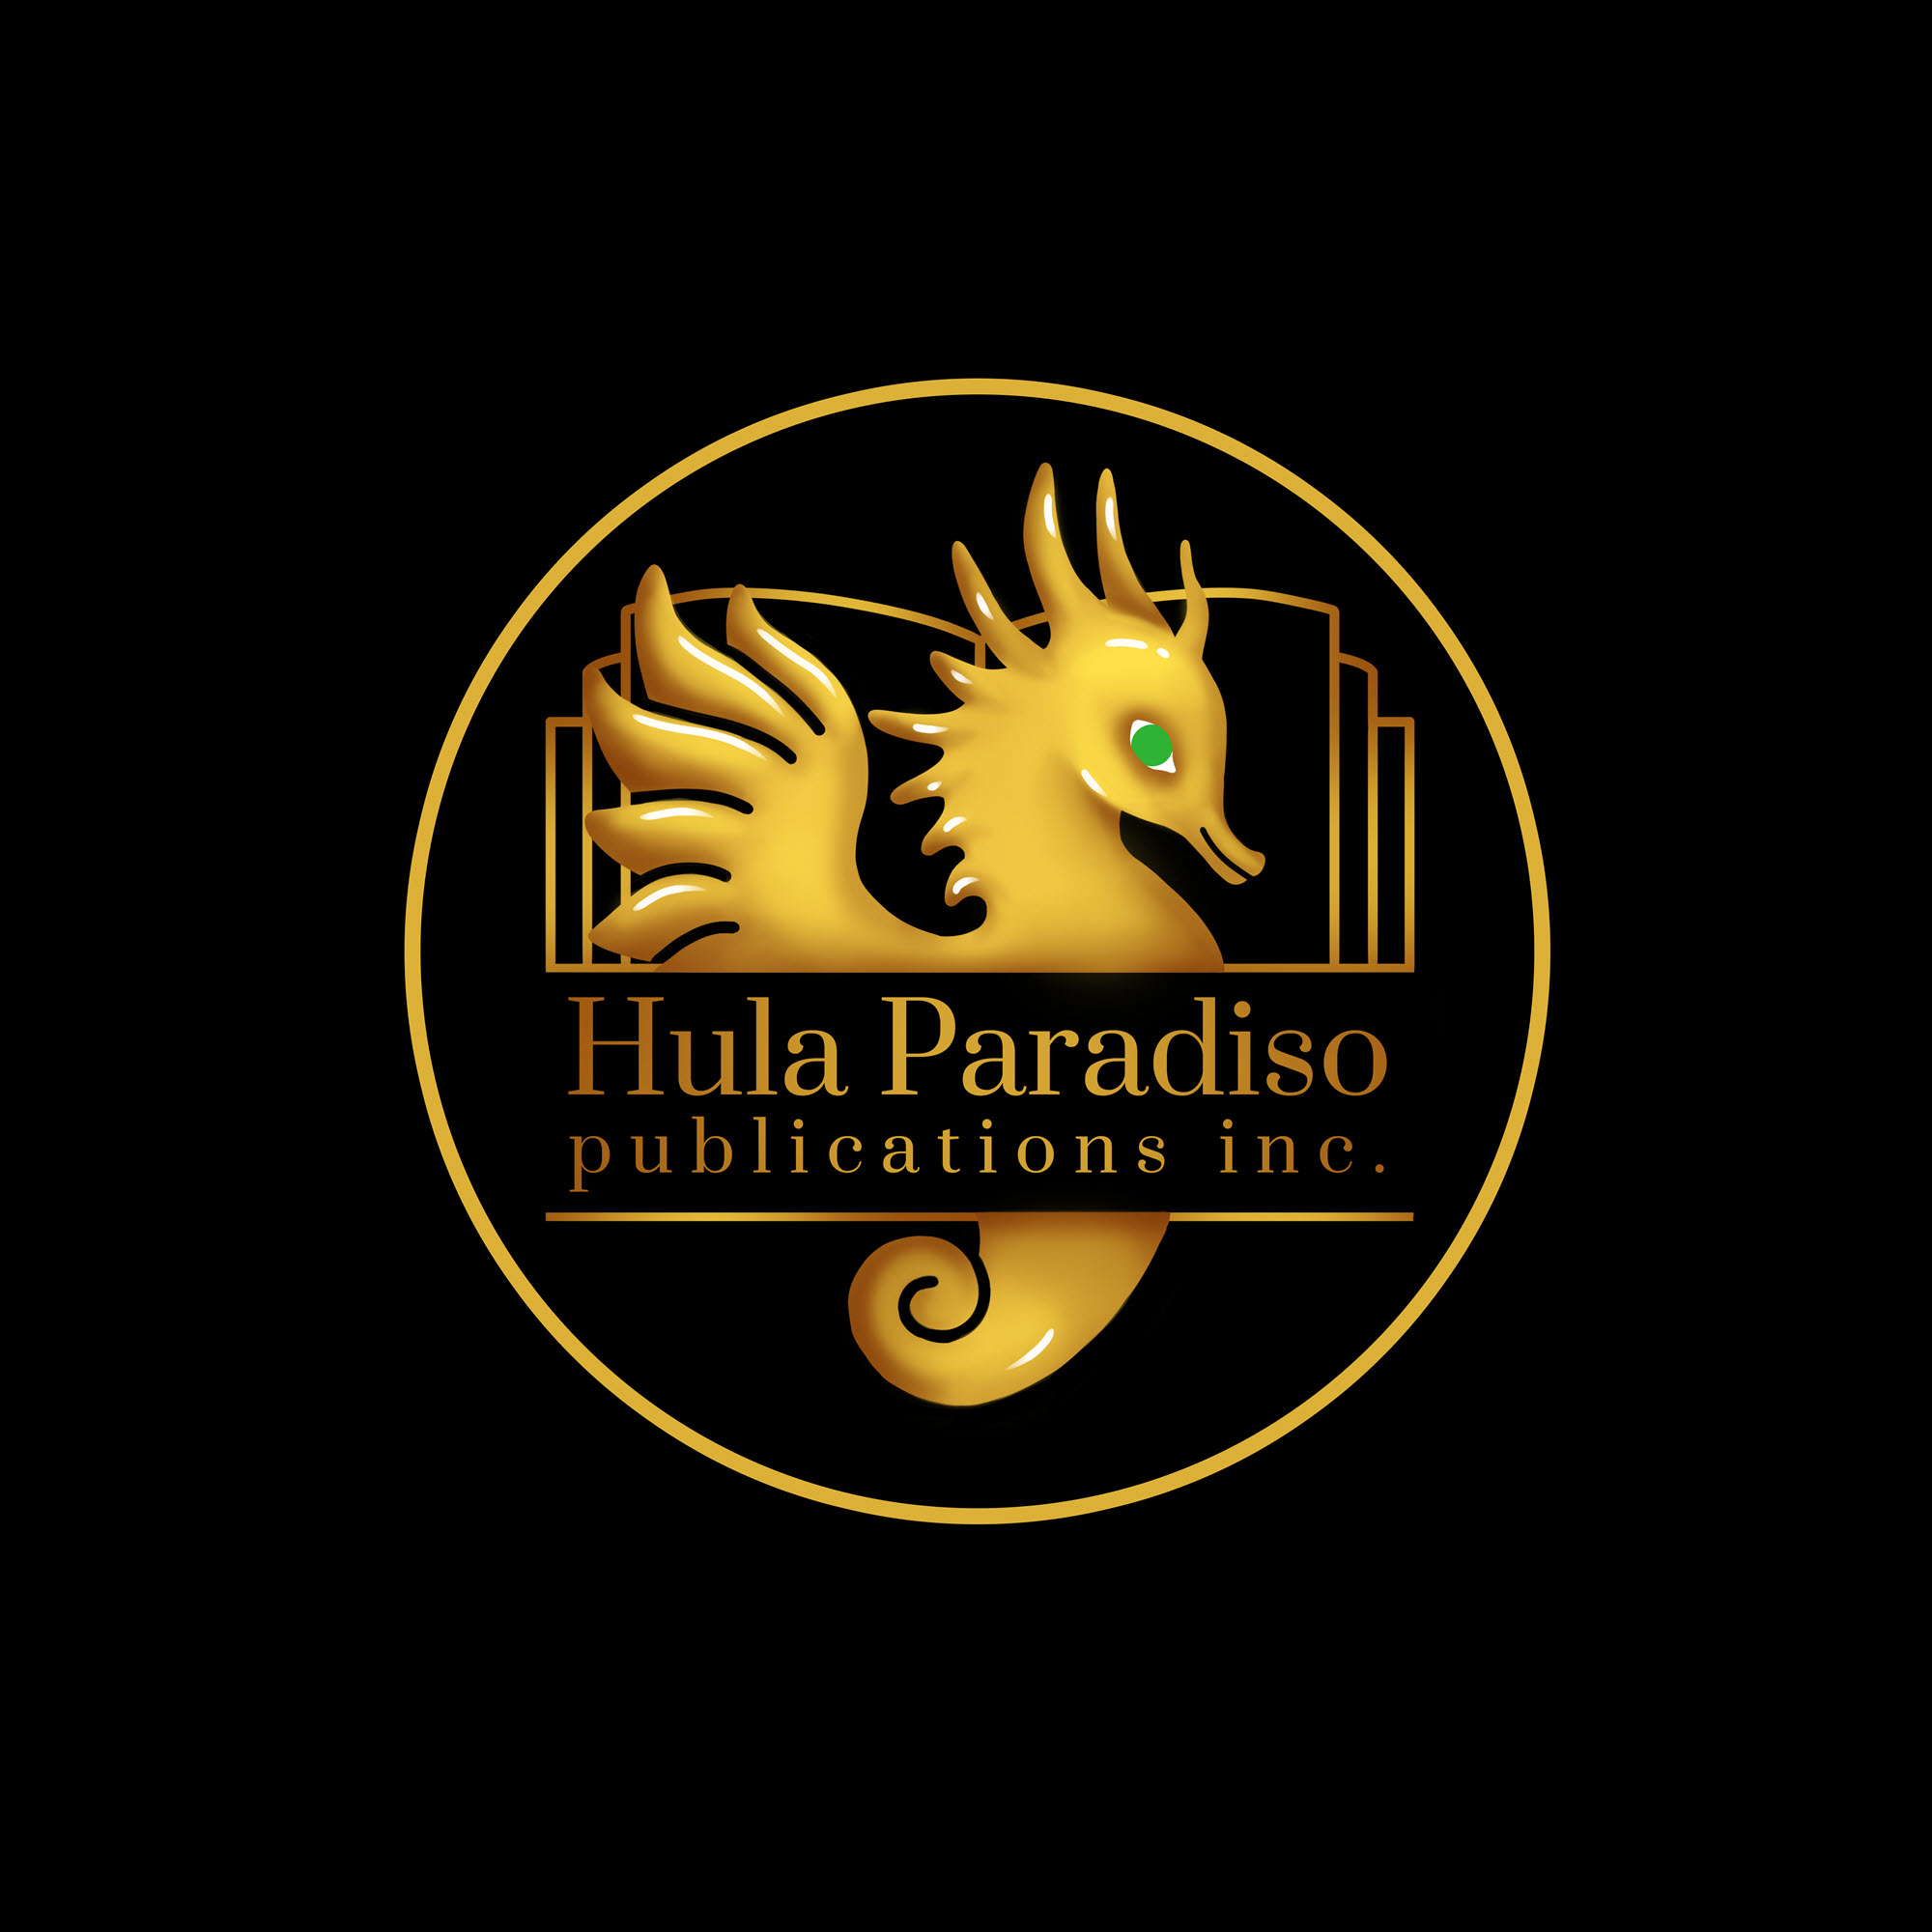 Hula Paradiso Publications Inc.